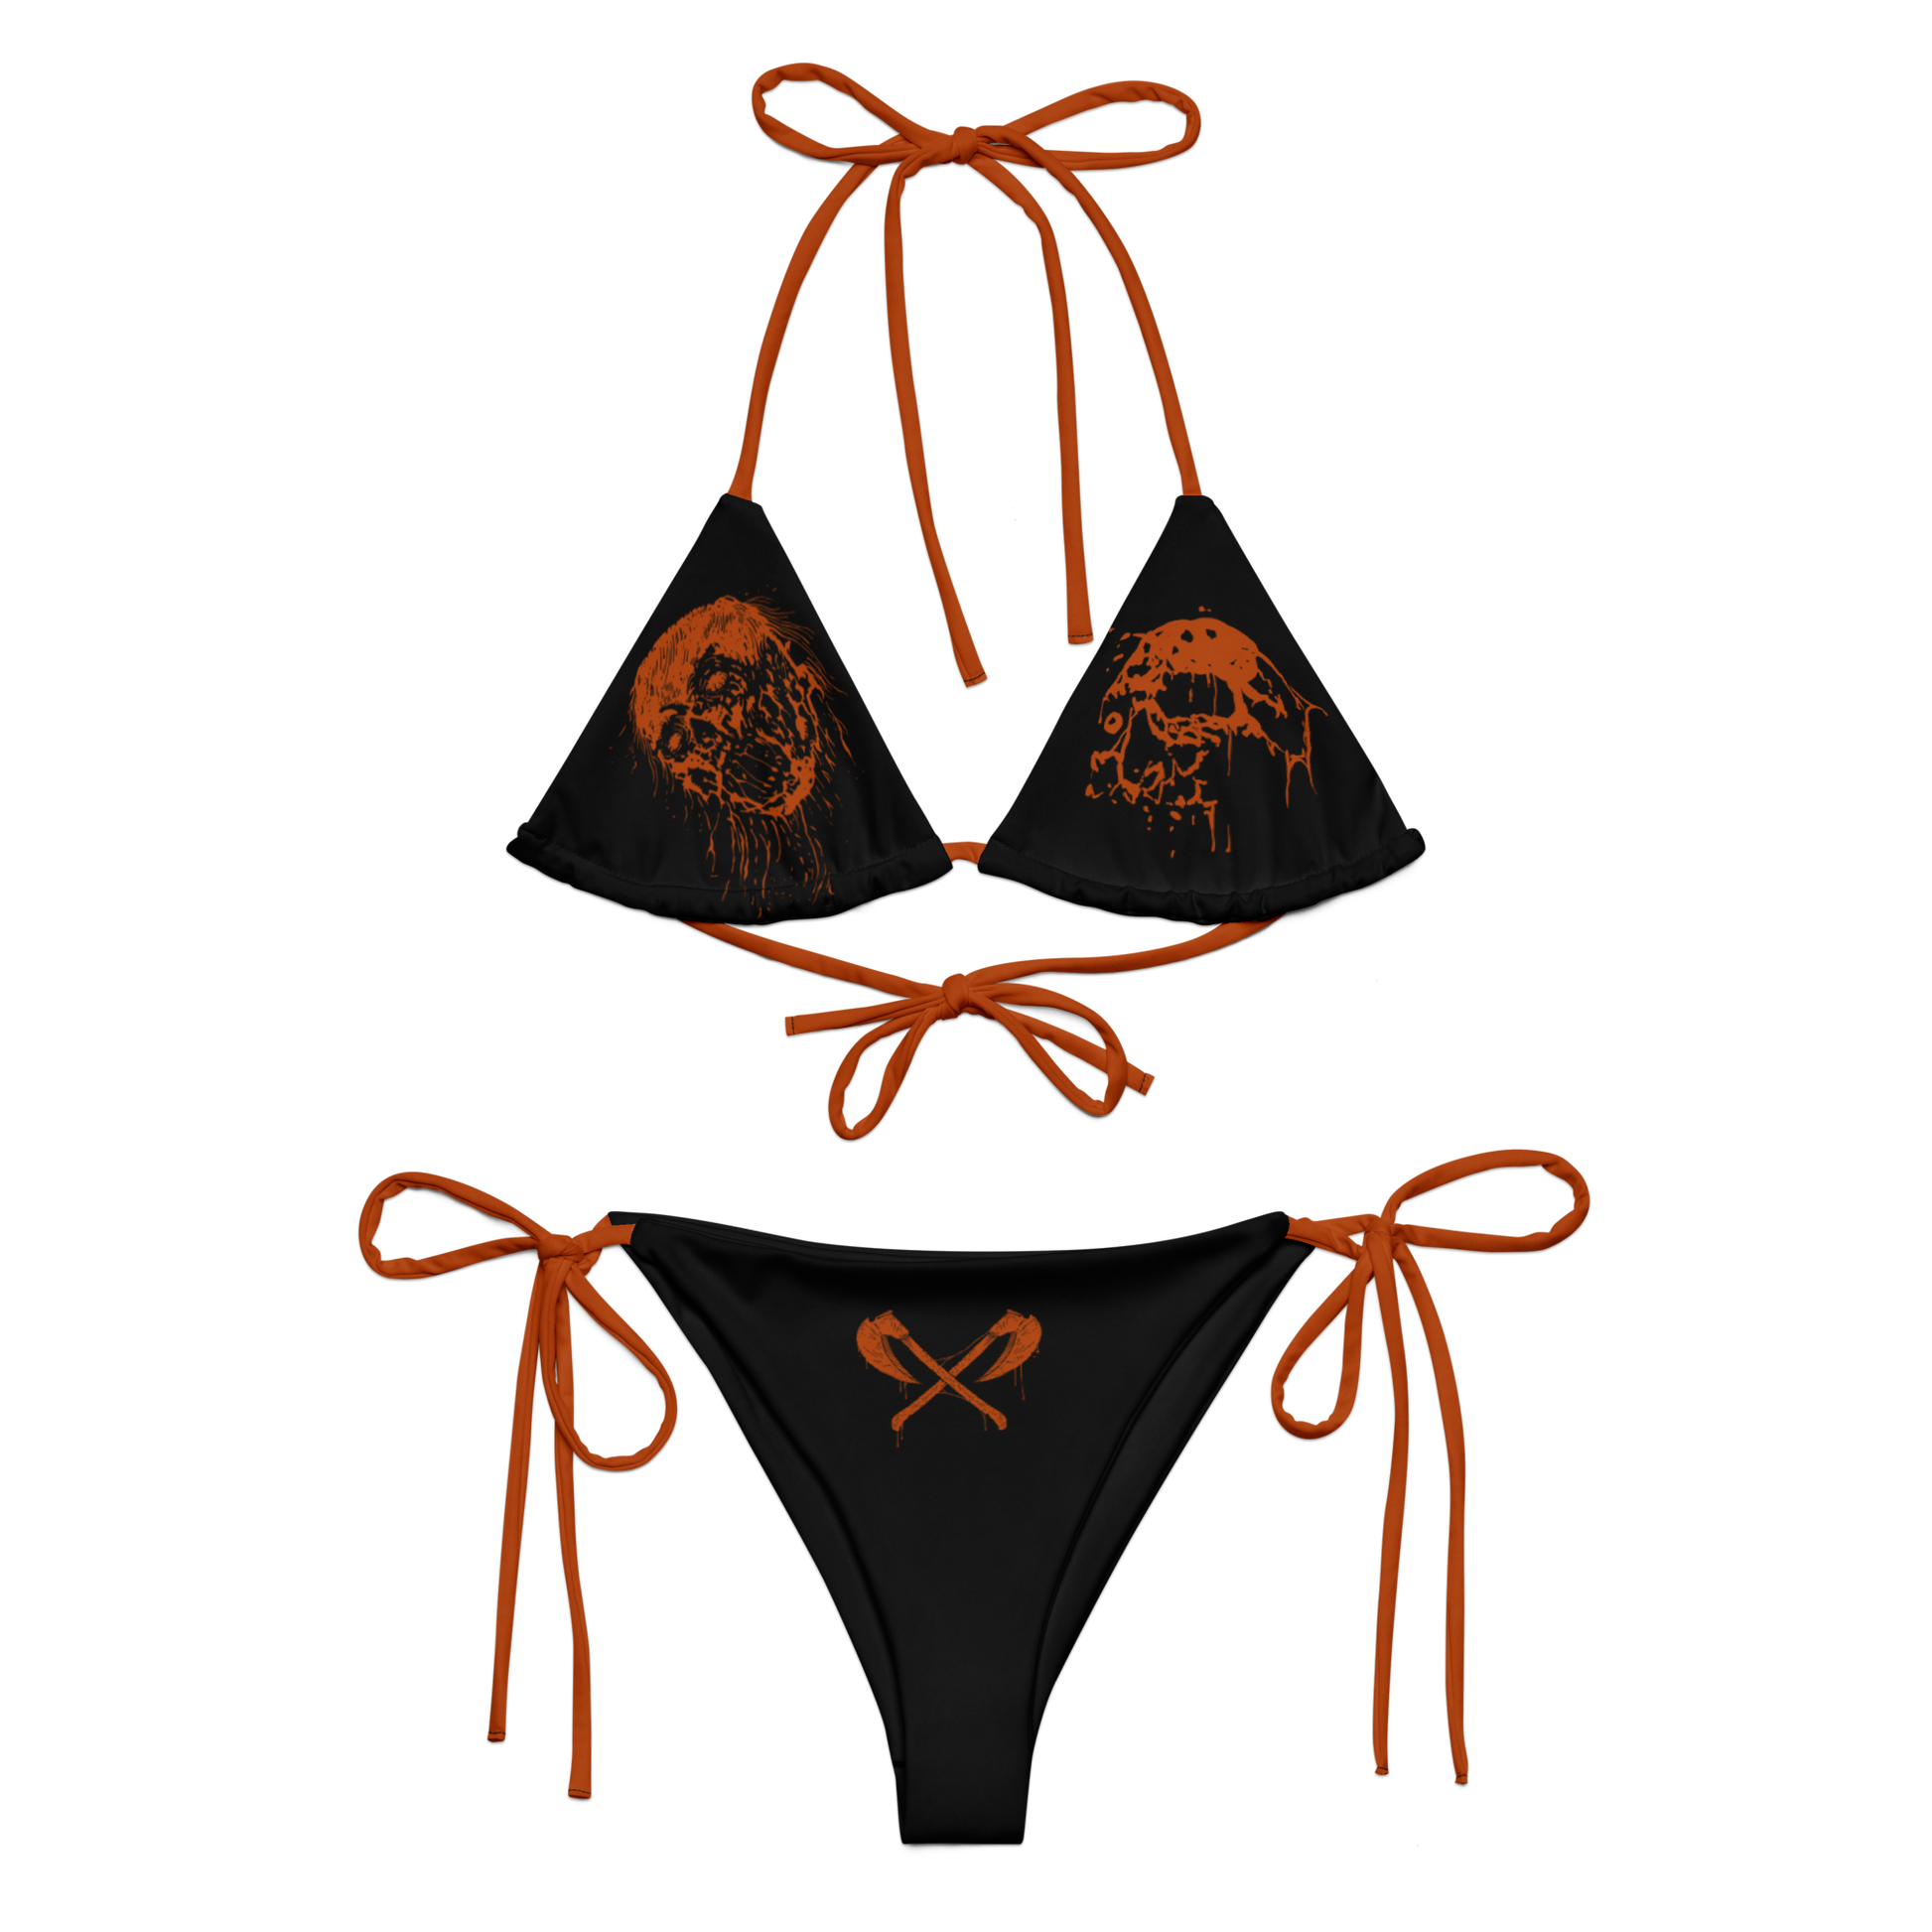 Hellfekted Orange Skulls official bikini swimsuit by Metal Mistress